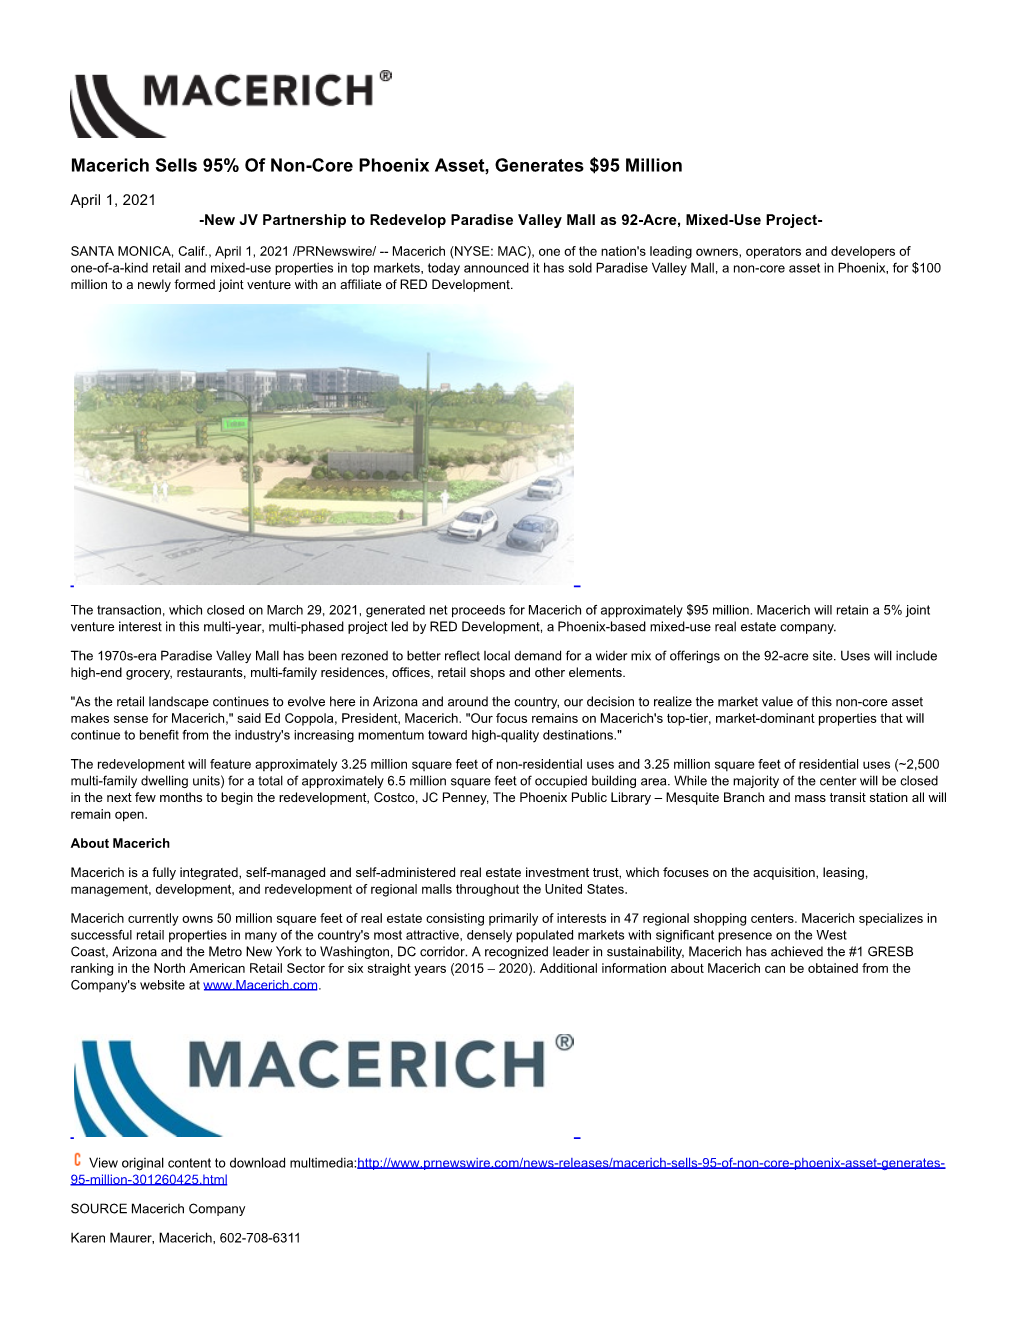 Macerich Sells 95% of Non-Core Phoenix Asset, Generates $95 Million